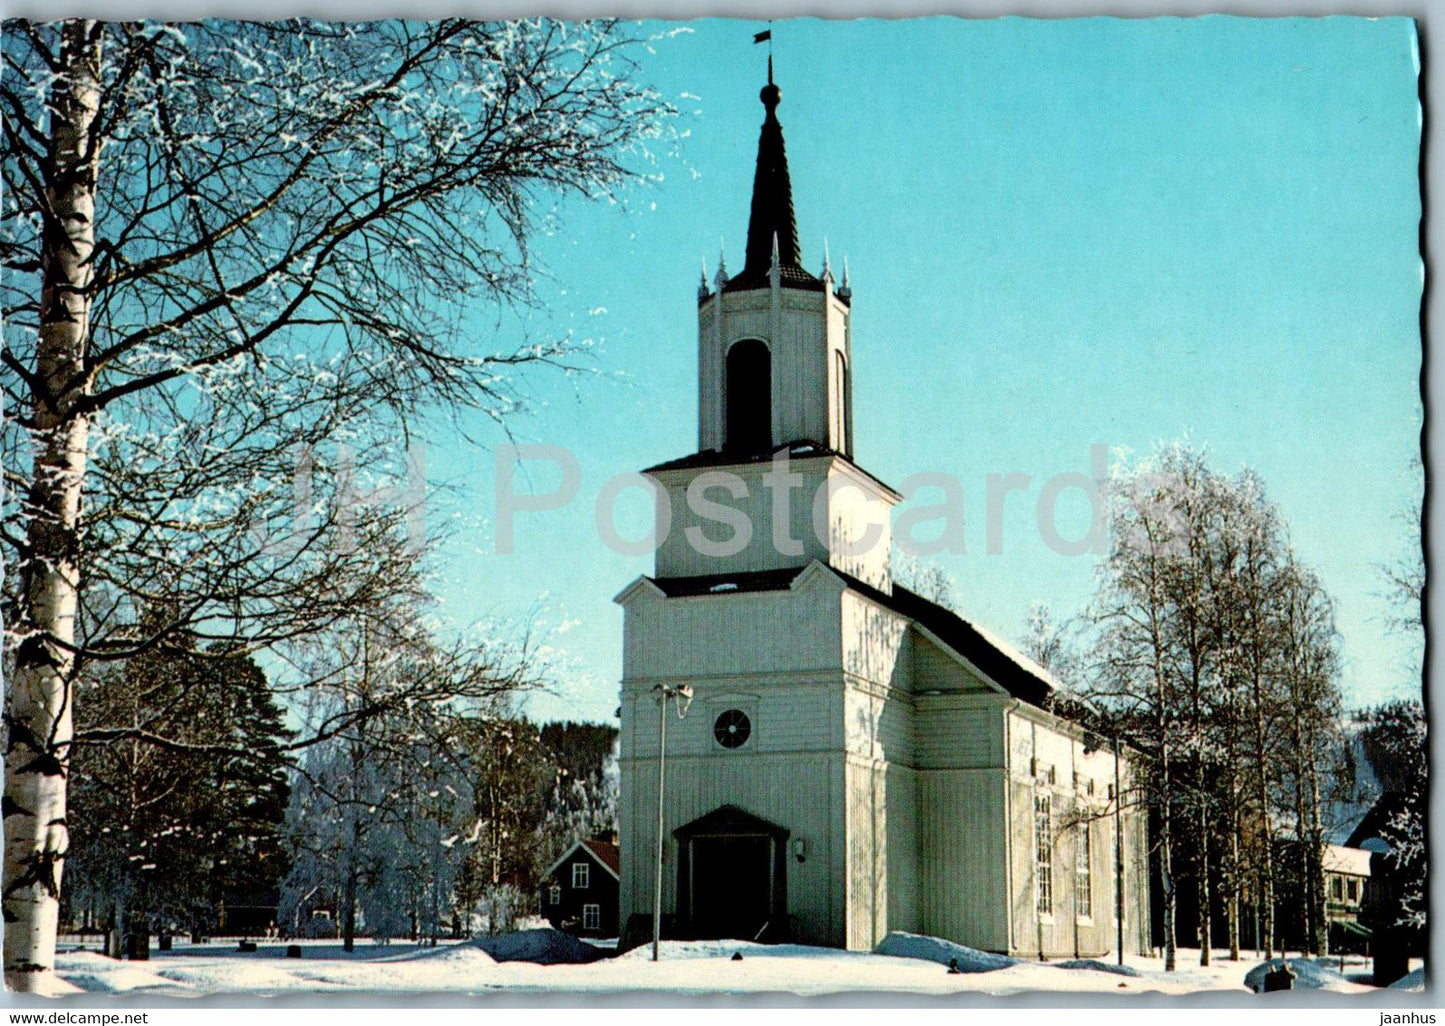 Mala kyrka - church - Sweden - used - JH Postcards